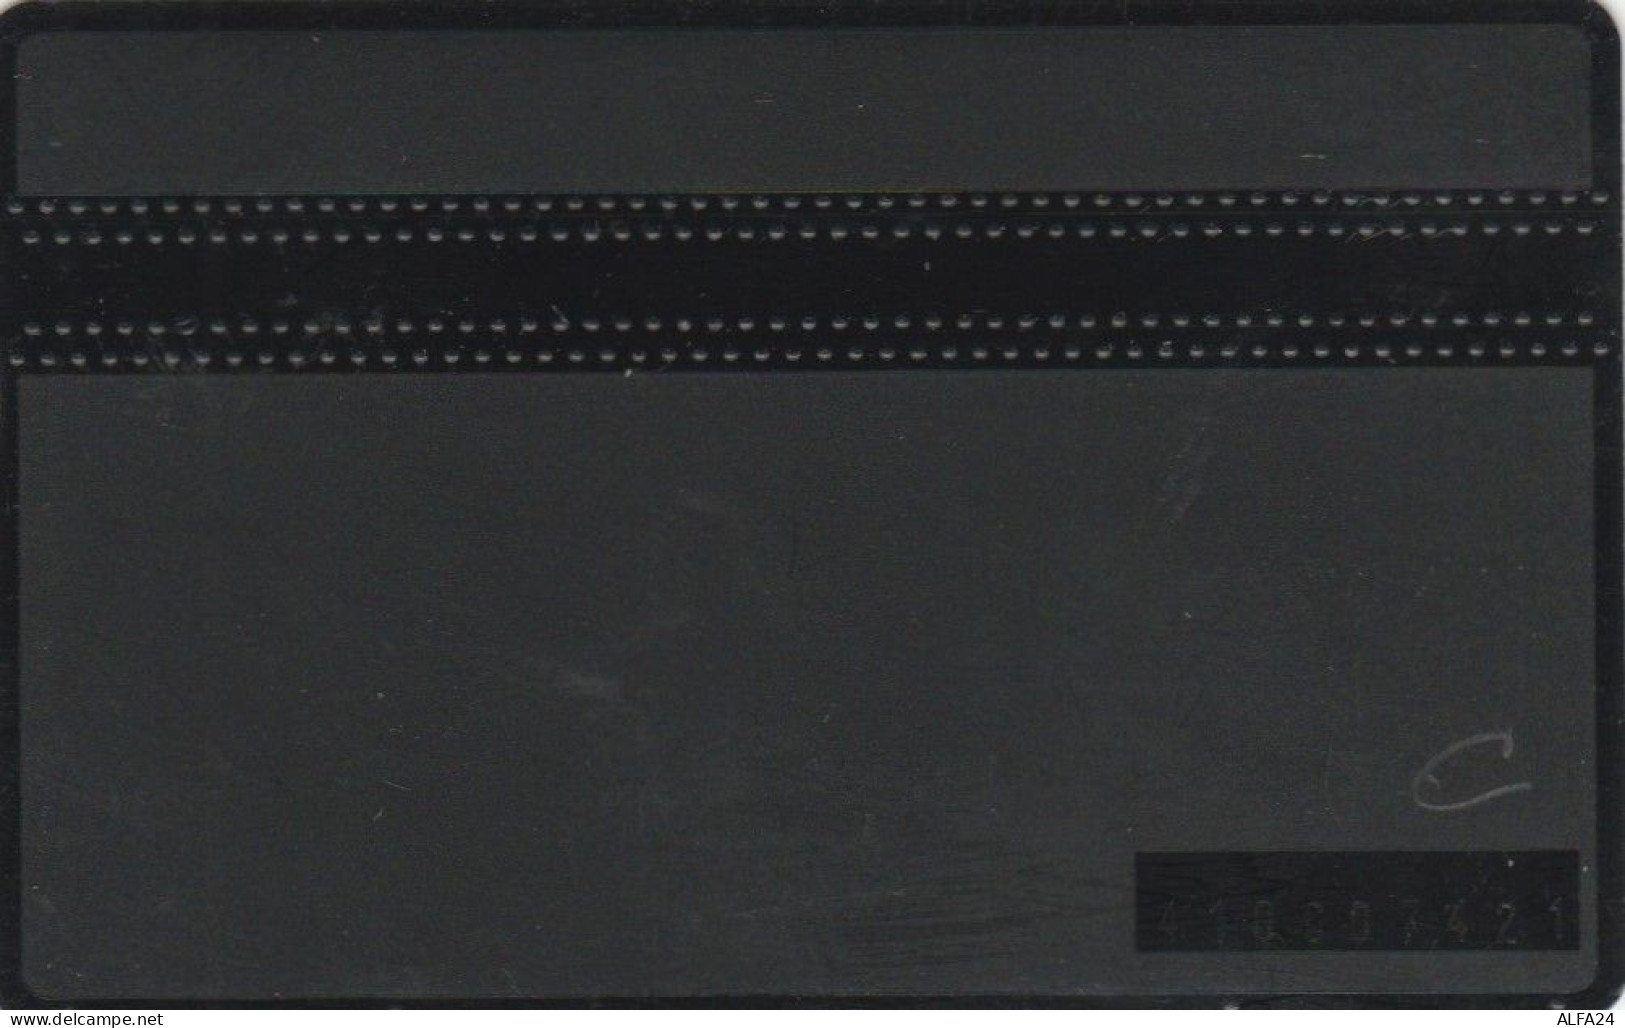 PHONE CARD BELGIO LANDIS (CK5824 - Senza Chip